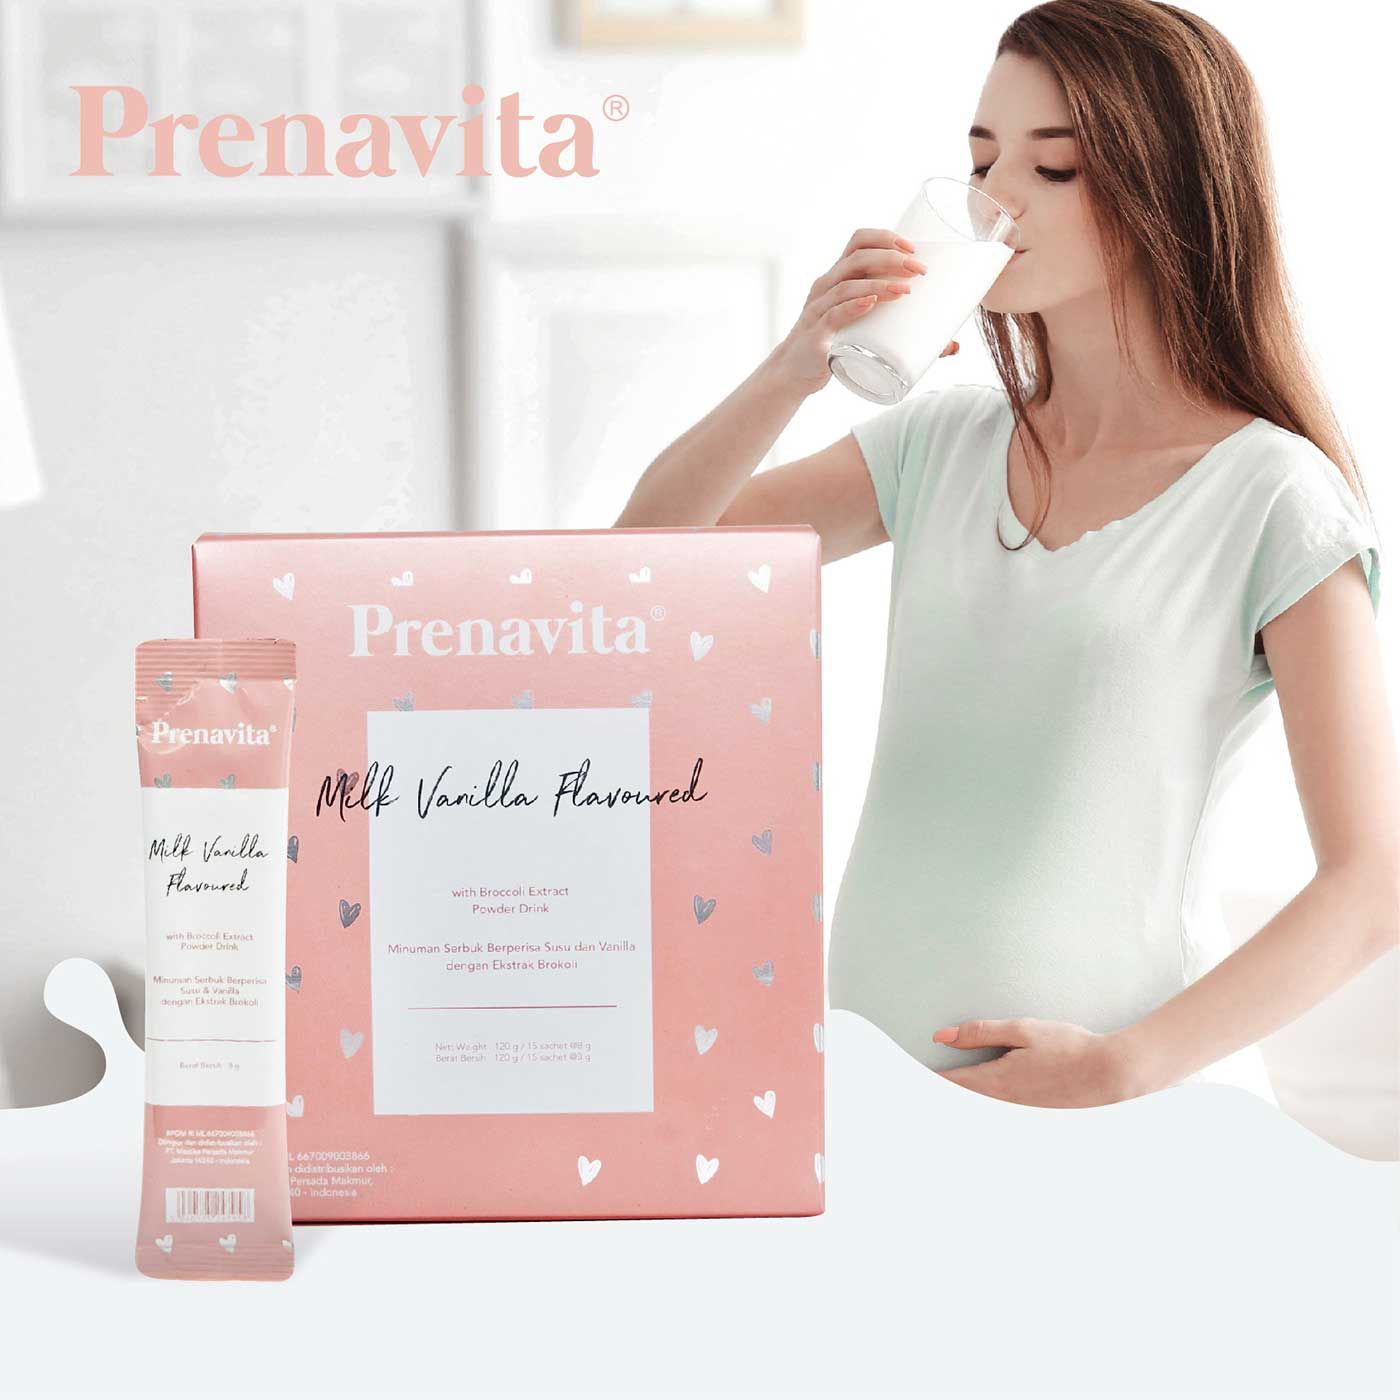 Prenavita Prenavita Health Food Milk Vanilla Flavoured F02801_15 - 1